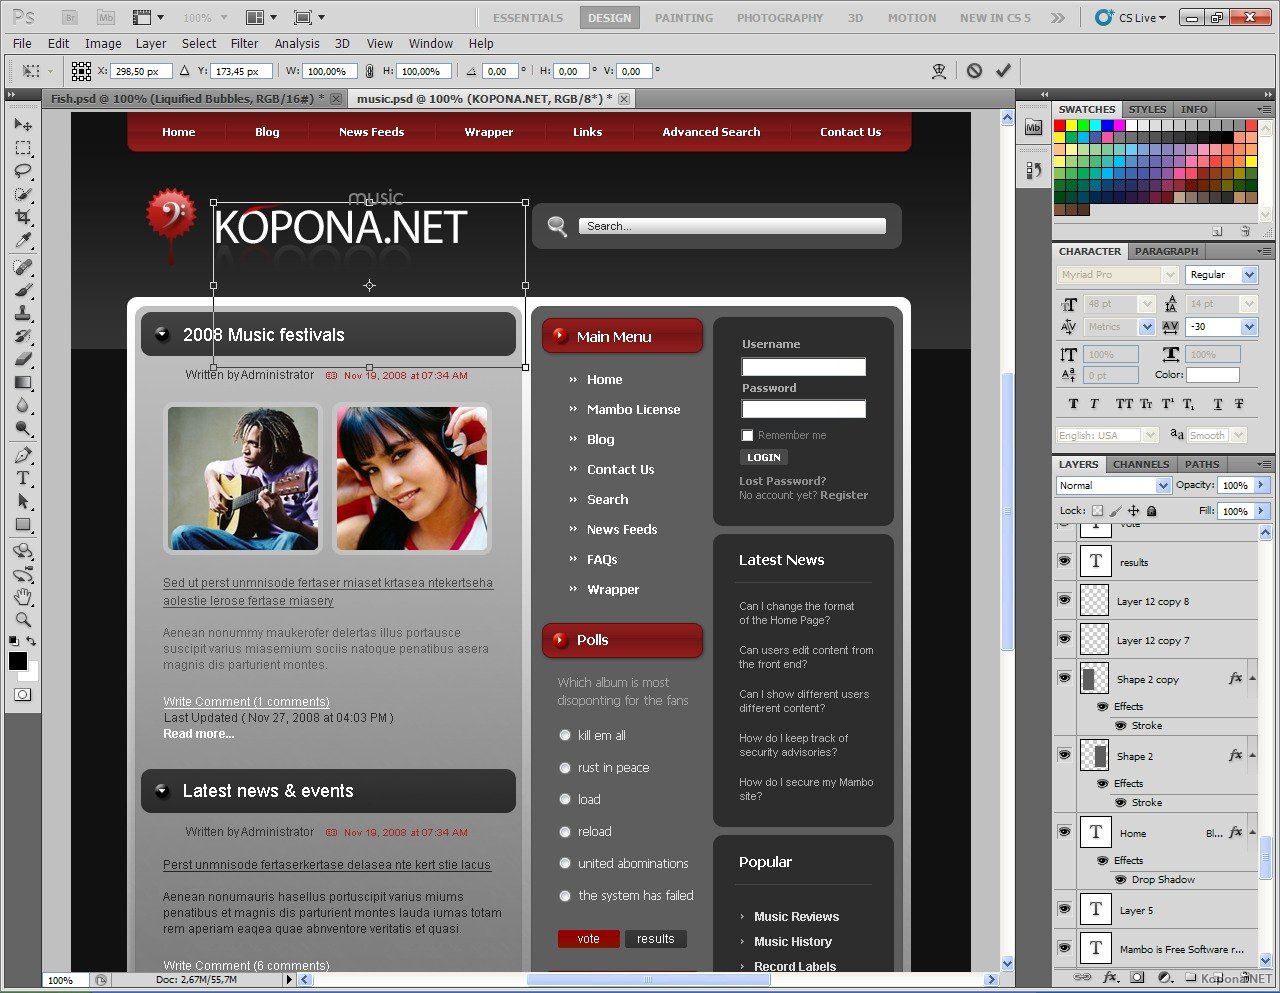 Adobe cs5 5 master collection keygen win 2011